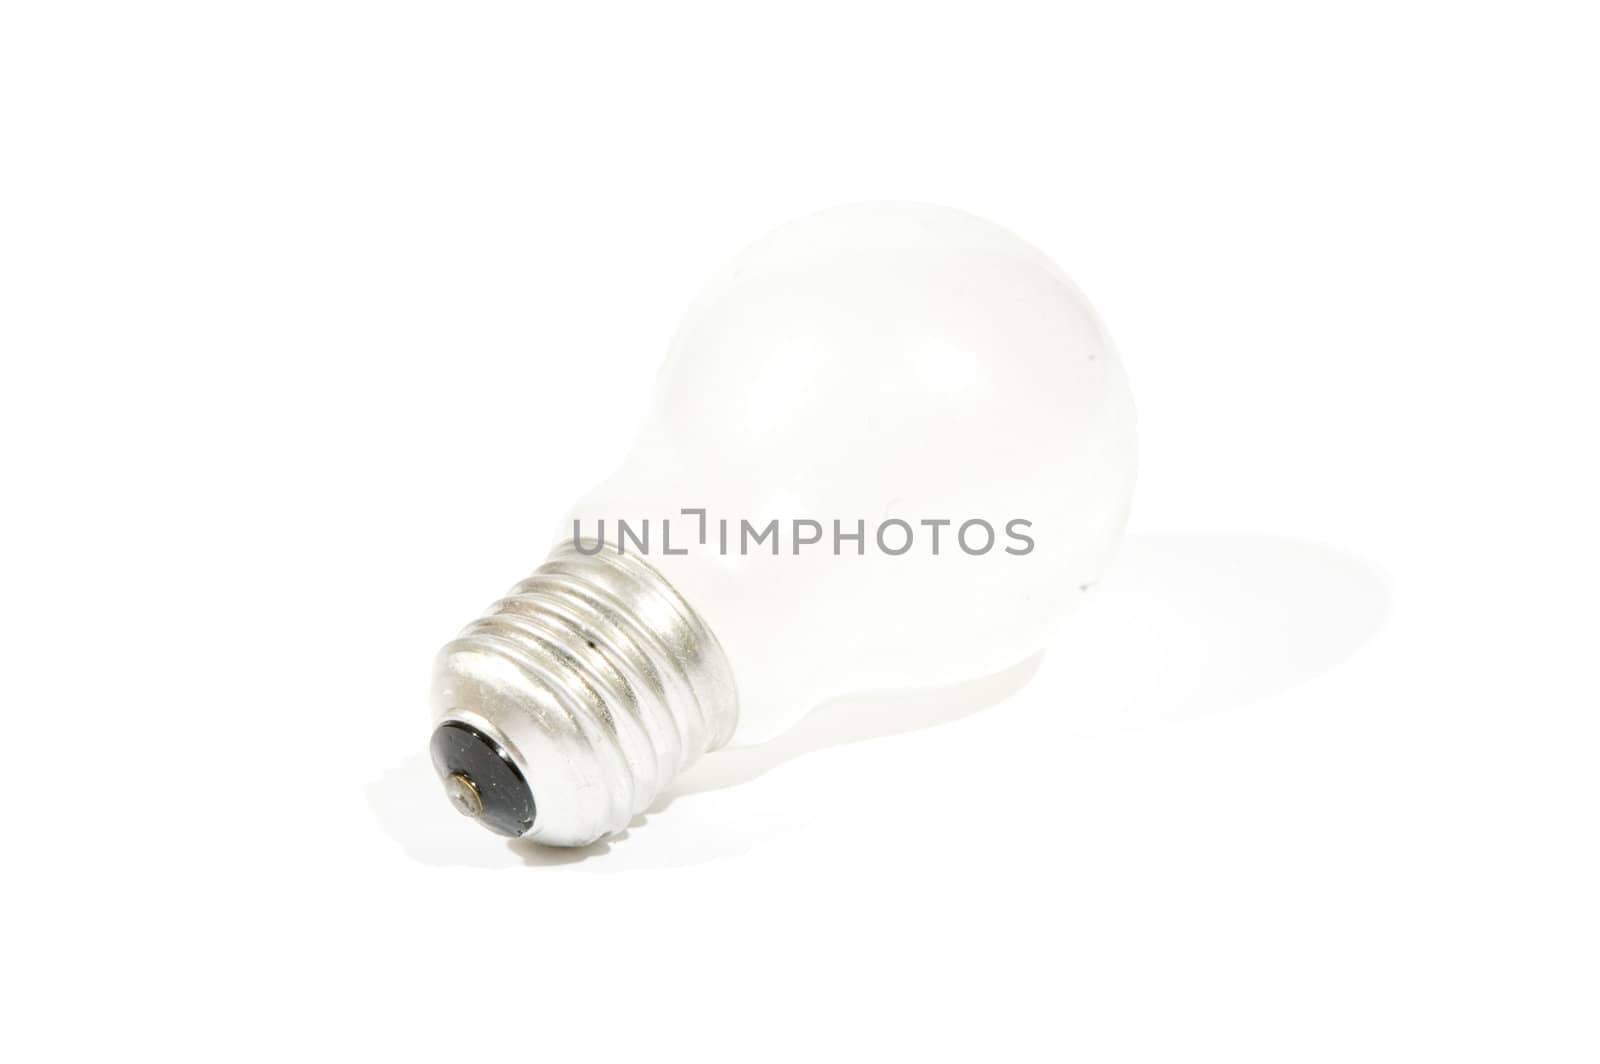 High-quality lightbulb with shadow  by ladyminnie